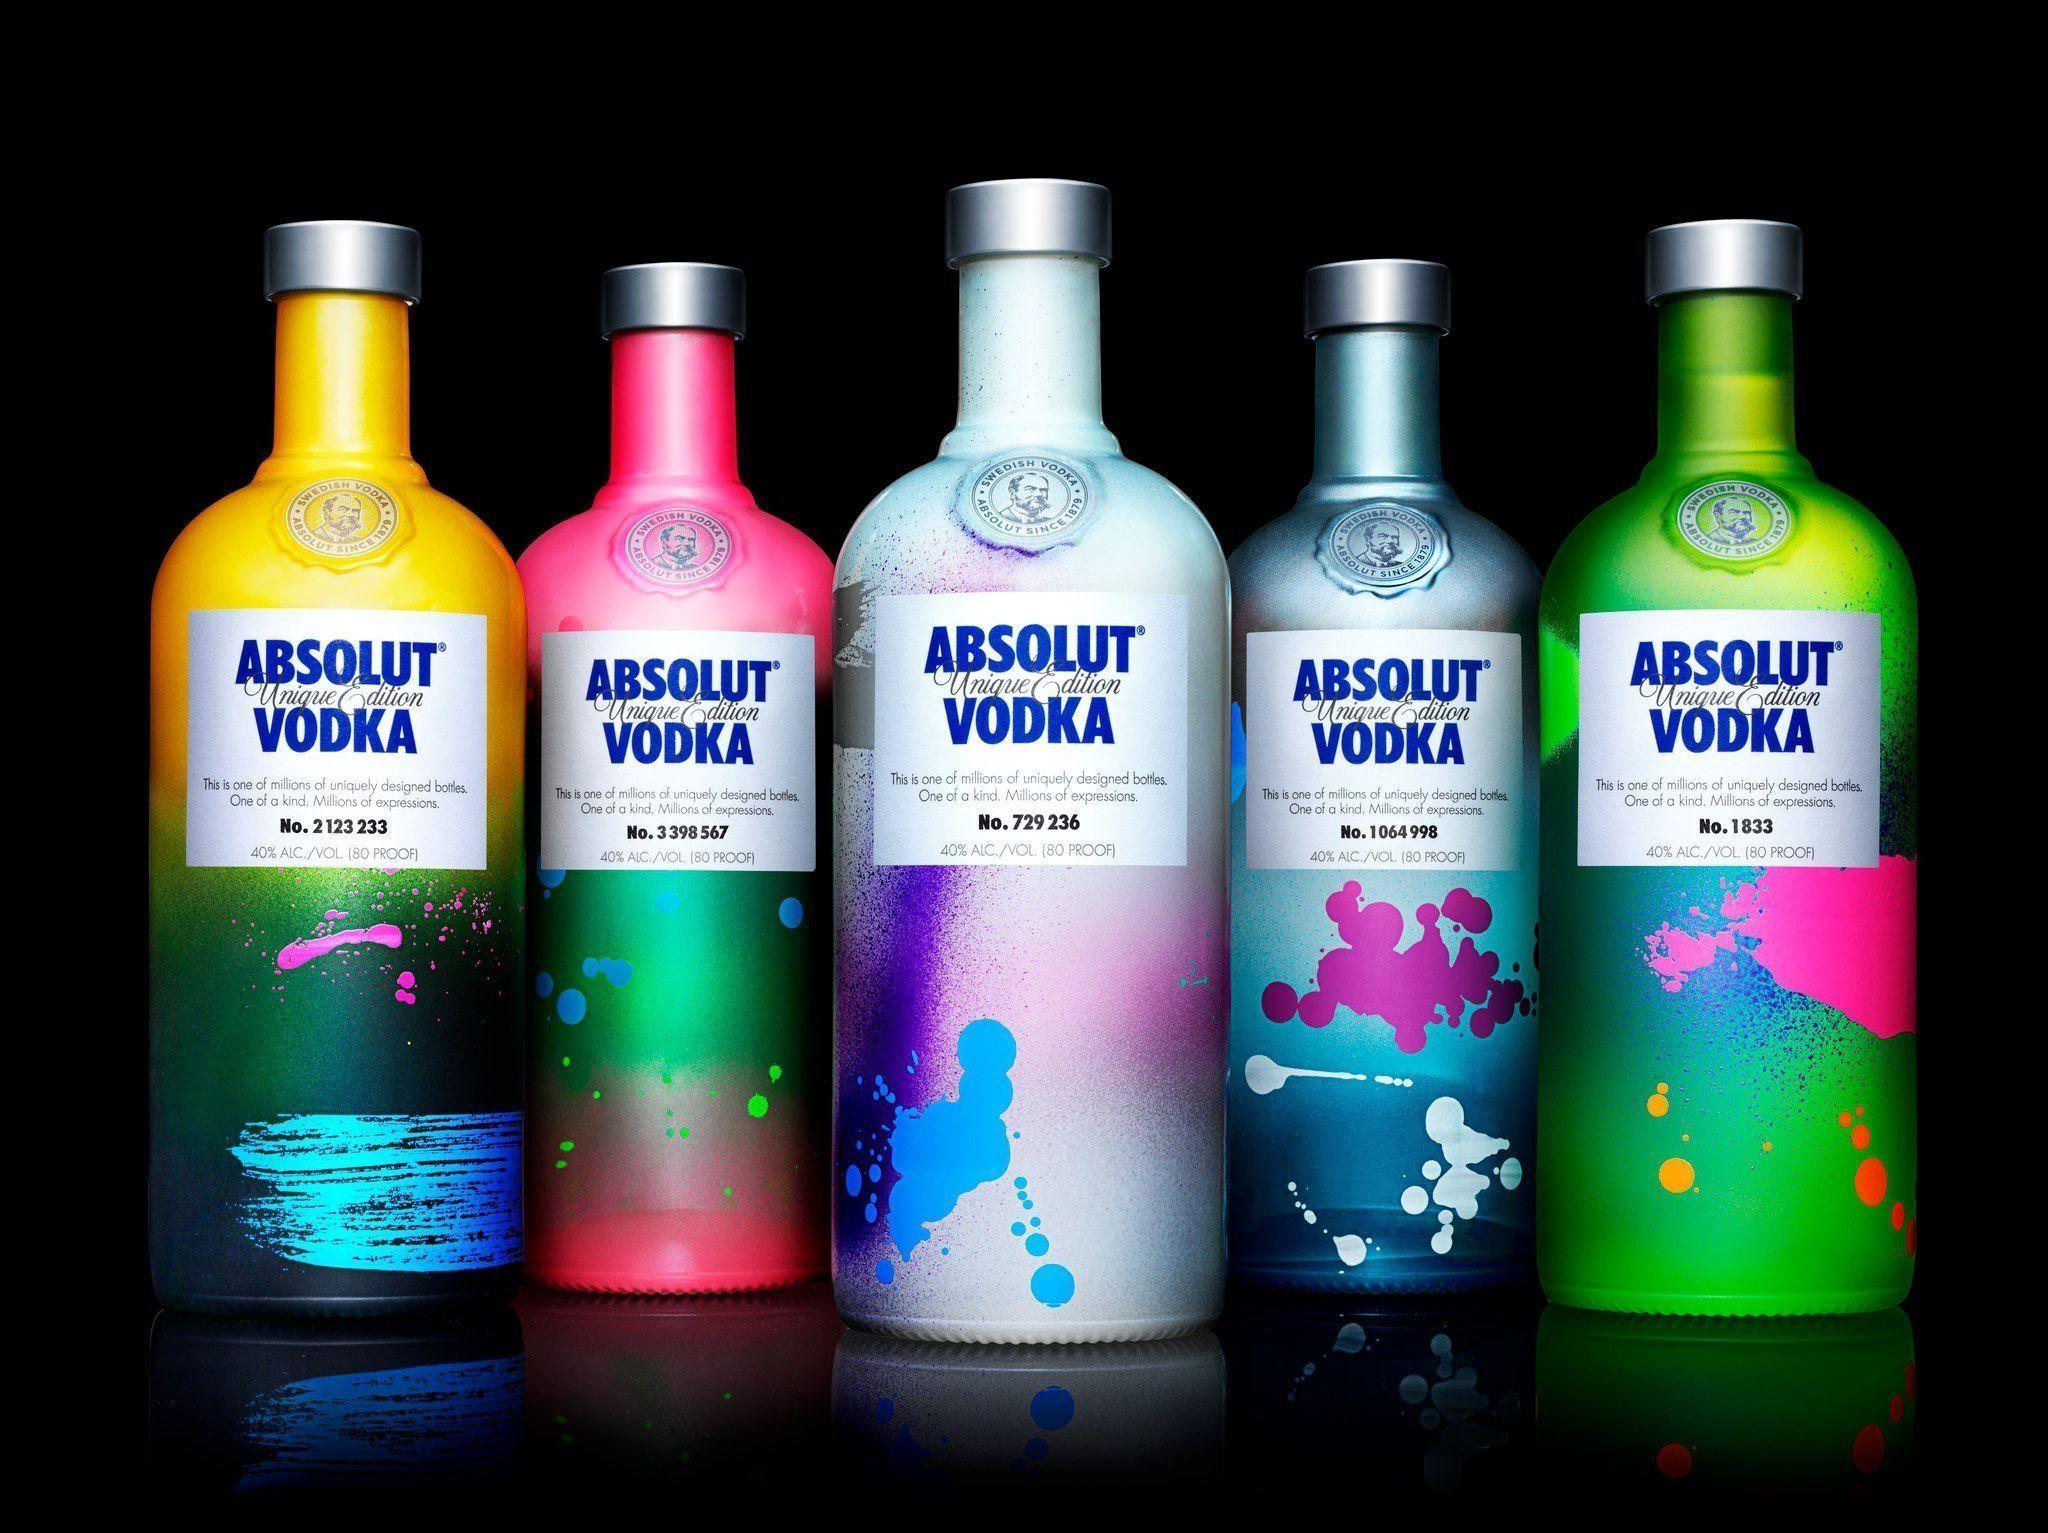 Absolut Vodka Wallpaper